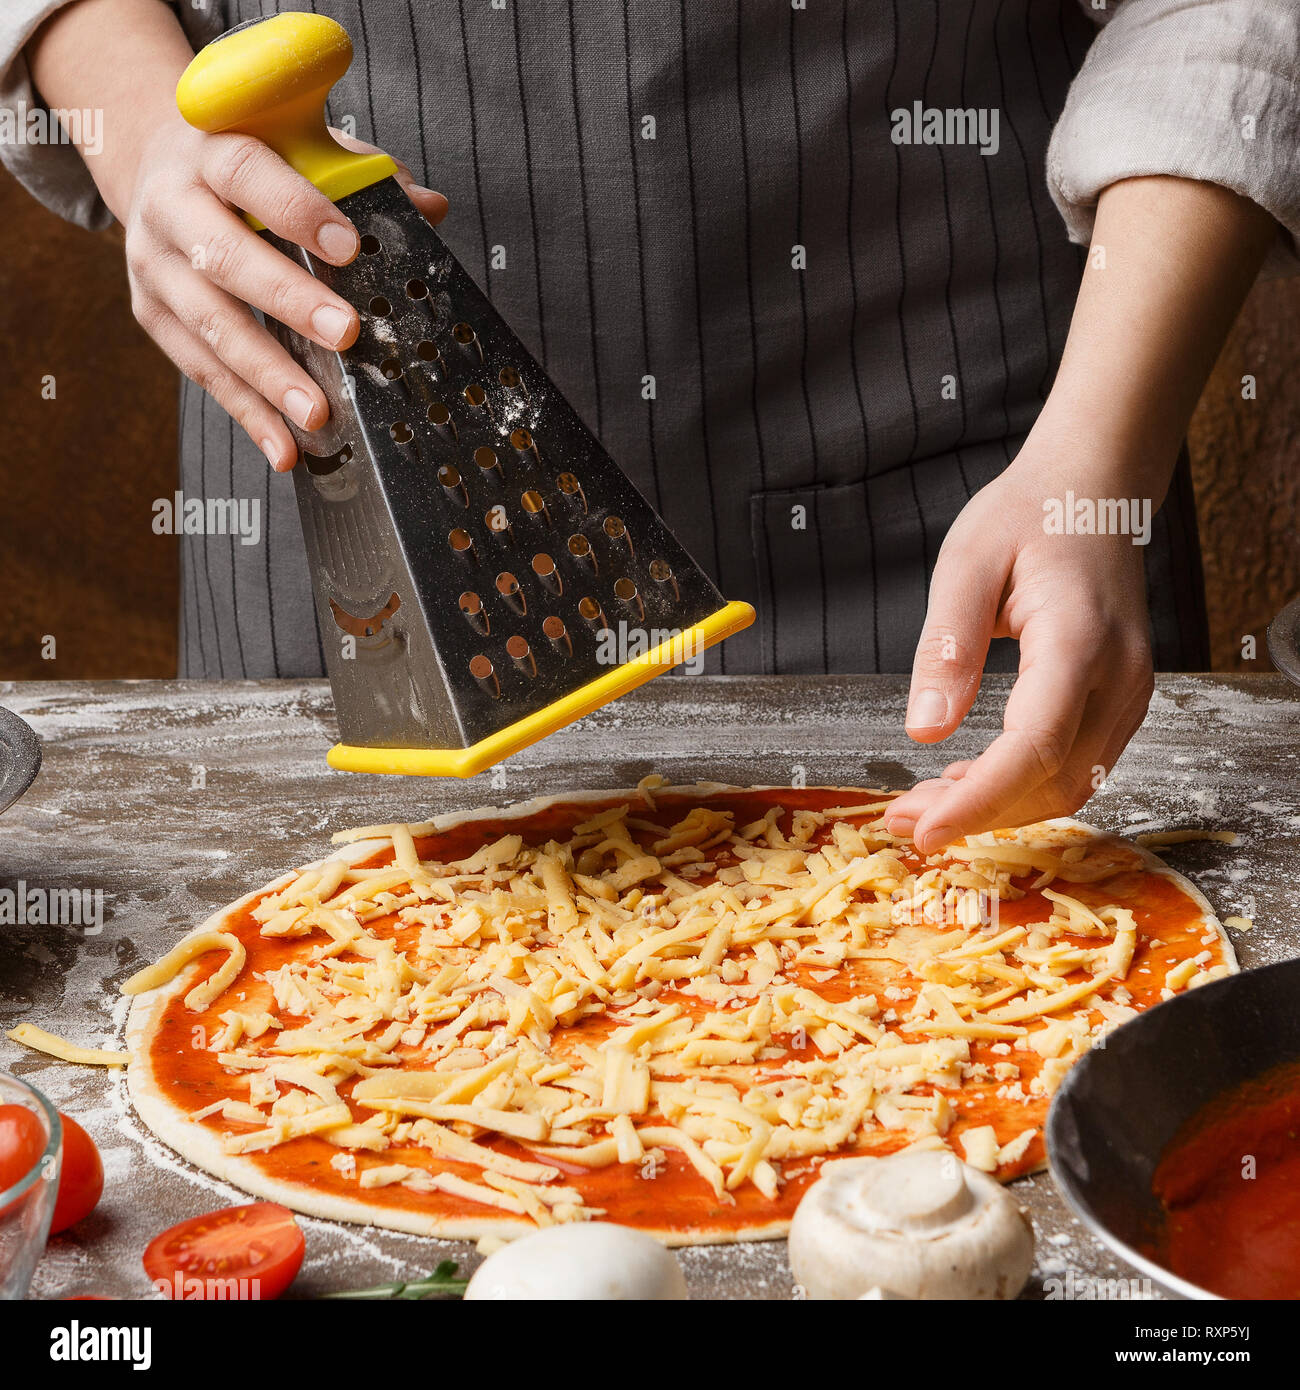 https://c8.alamy.com/comp/RXP5YJ/pizza-preparation-woman-rubbing-cheese-on-grater-RXP5YJ.jpg